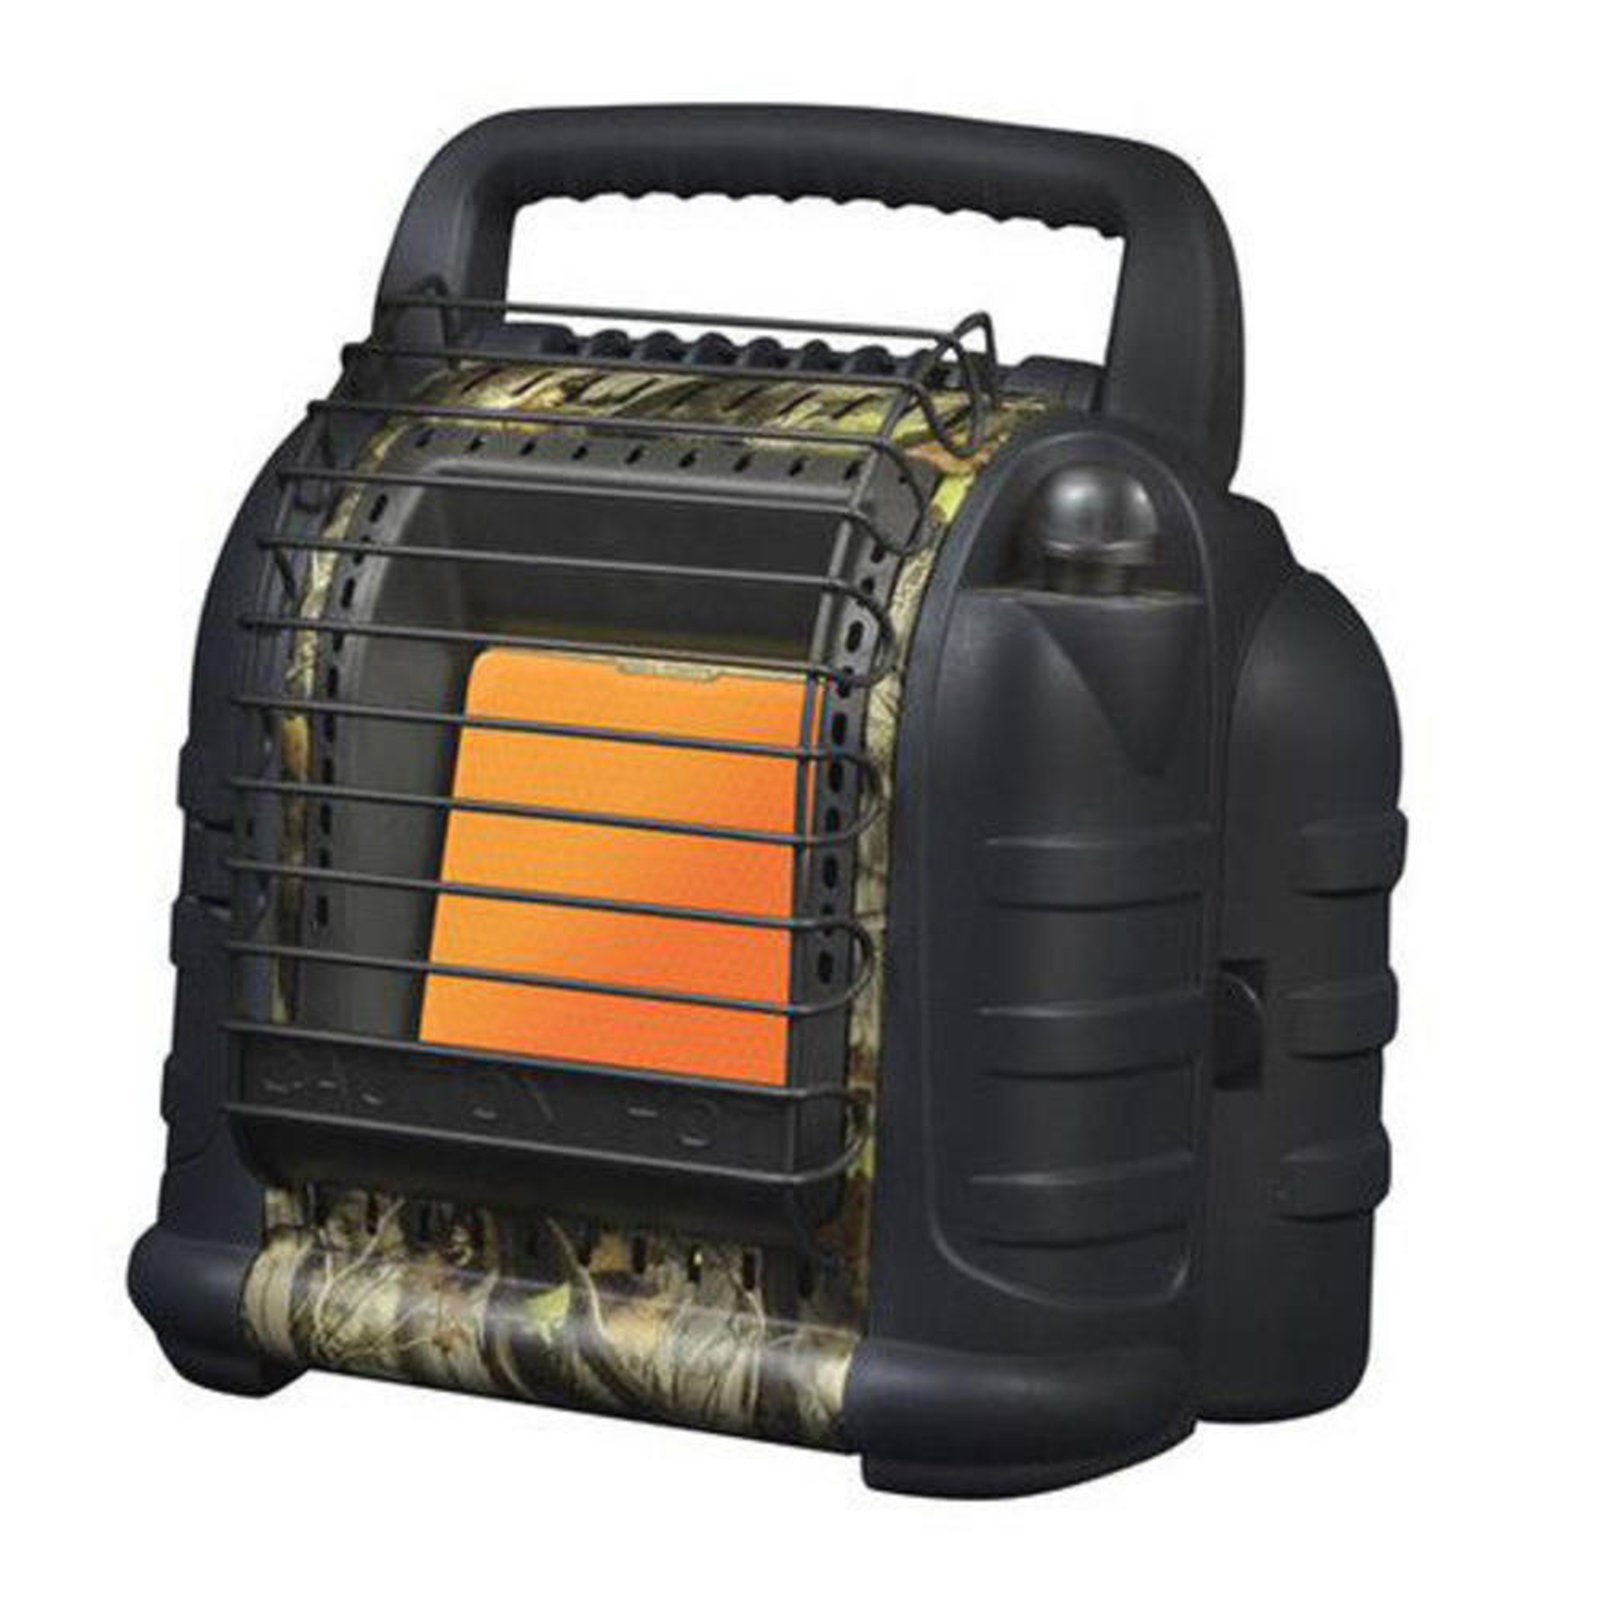 Mr Heater MHRF232035 6000-12,000BTU Portable Outdoor Heater with Single Control Start Knob